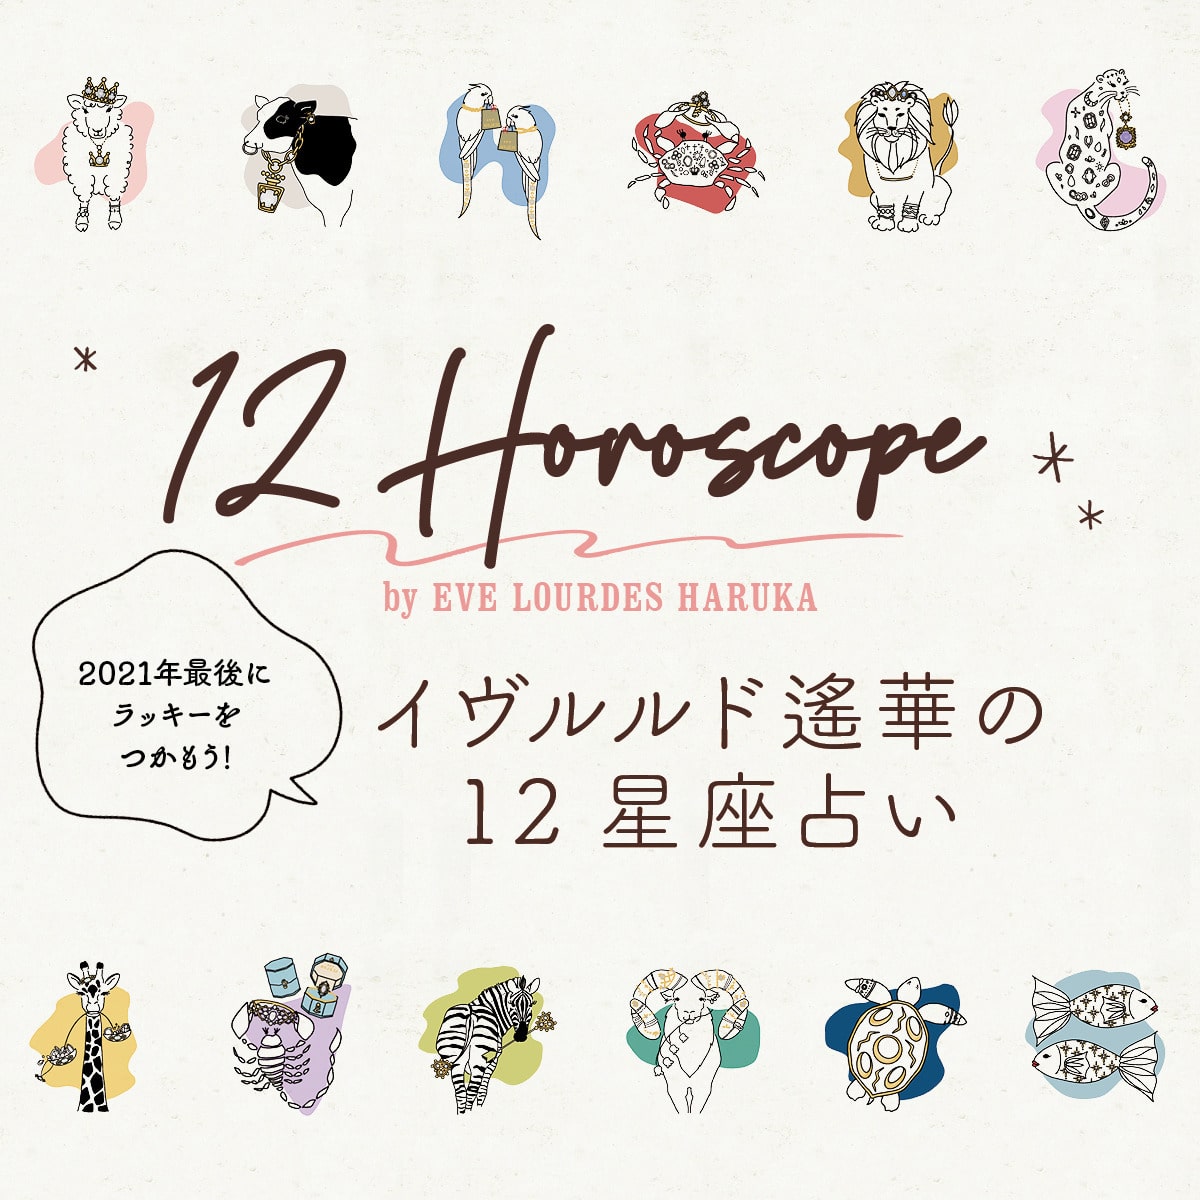 12horoscope by EVE LOURDES HARUKA